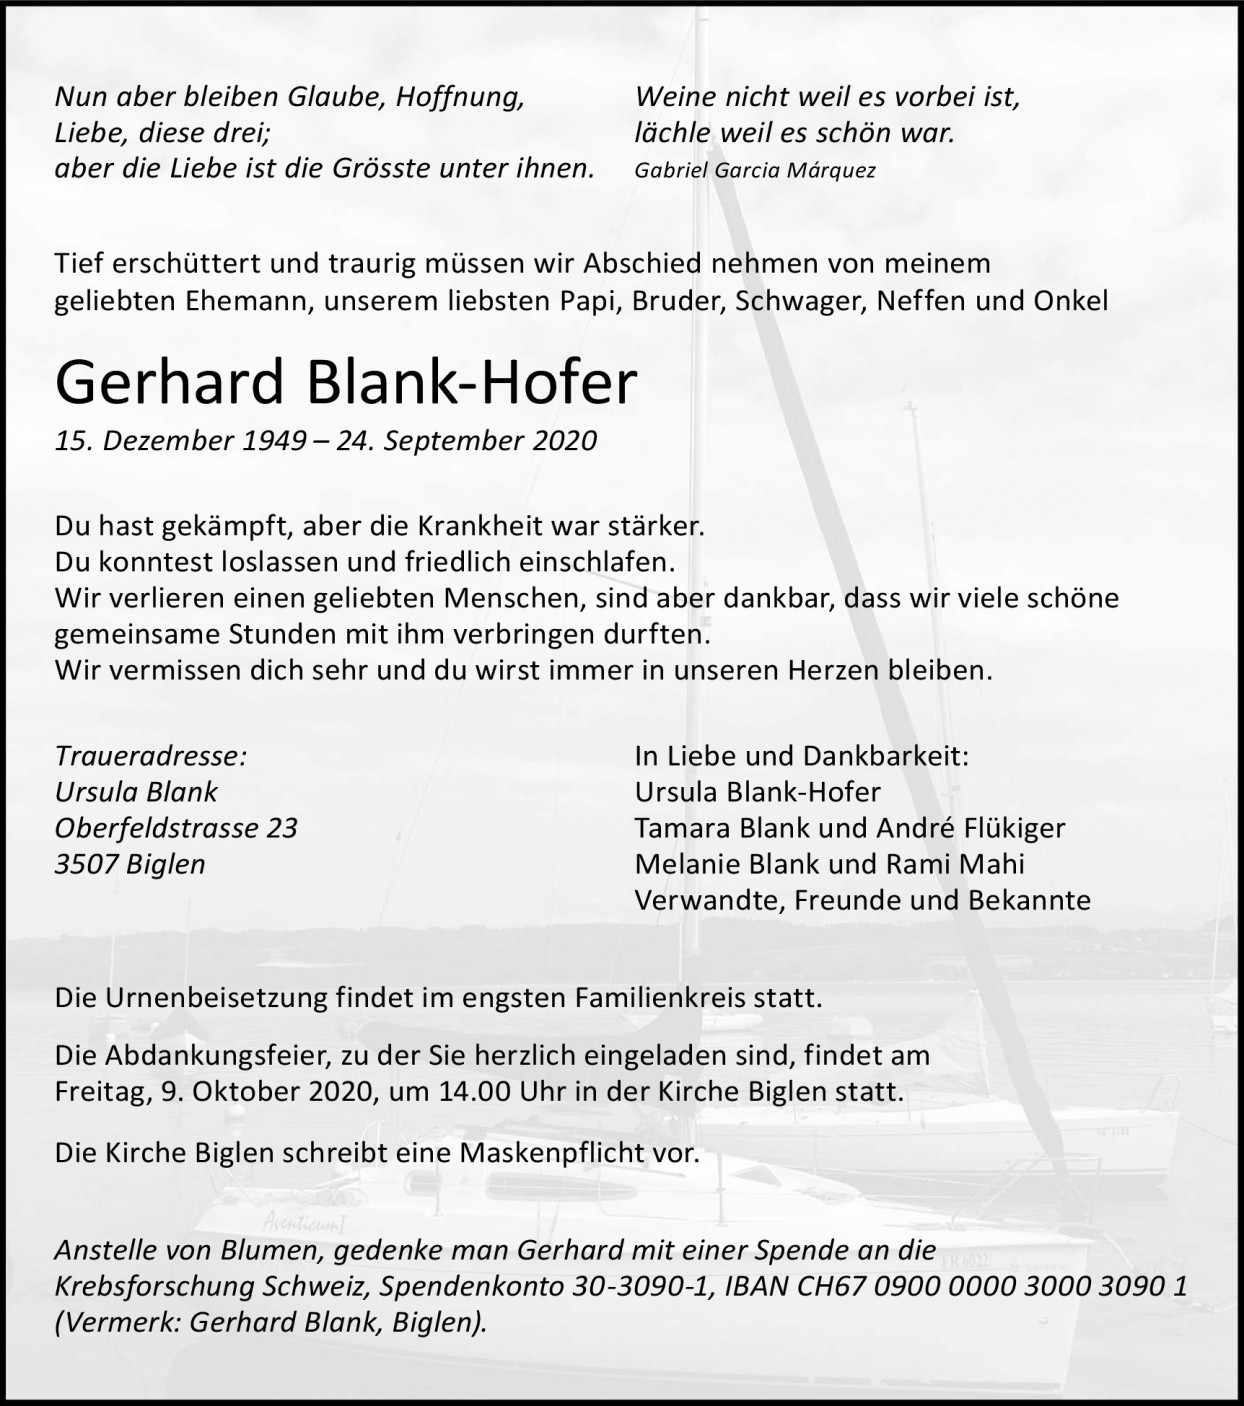 Gerhard Blank-Hofer